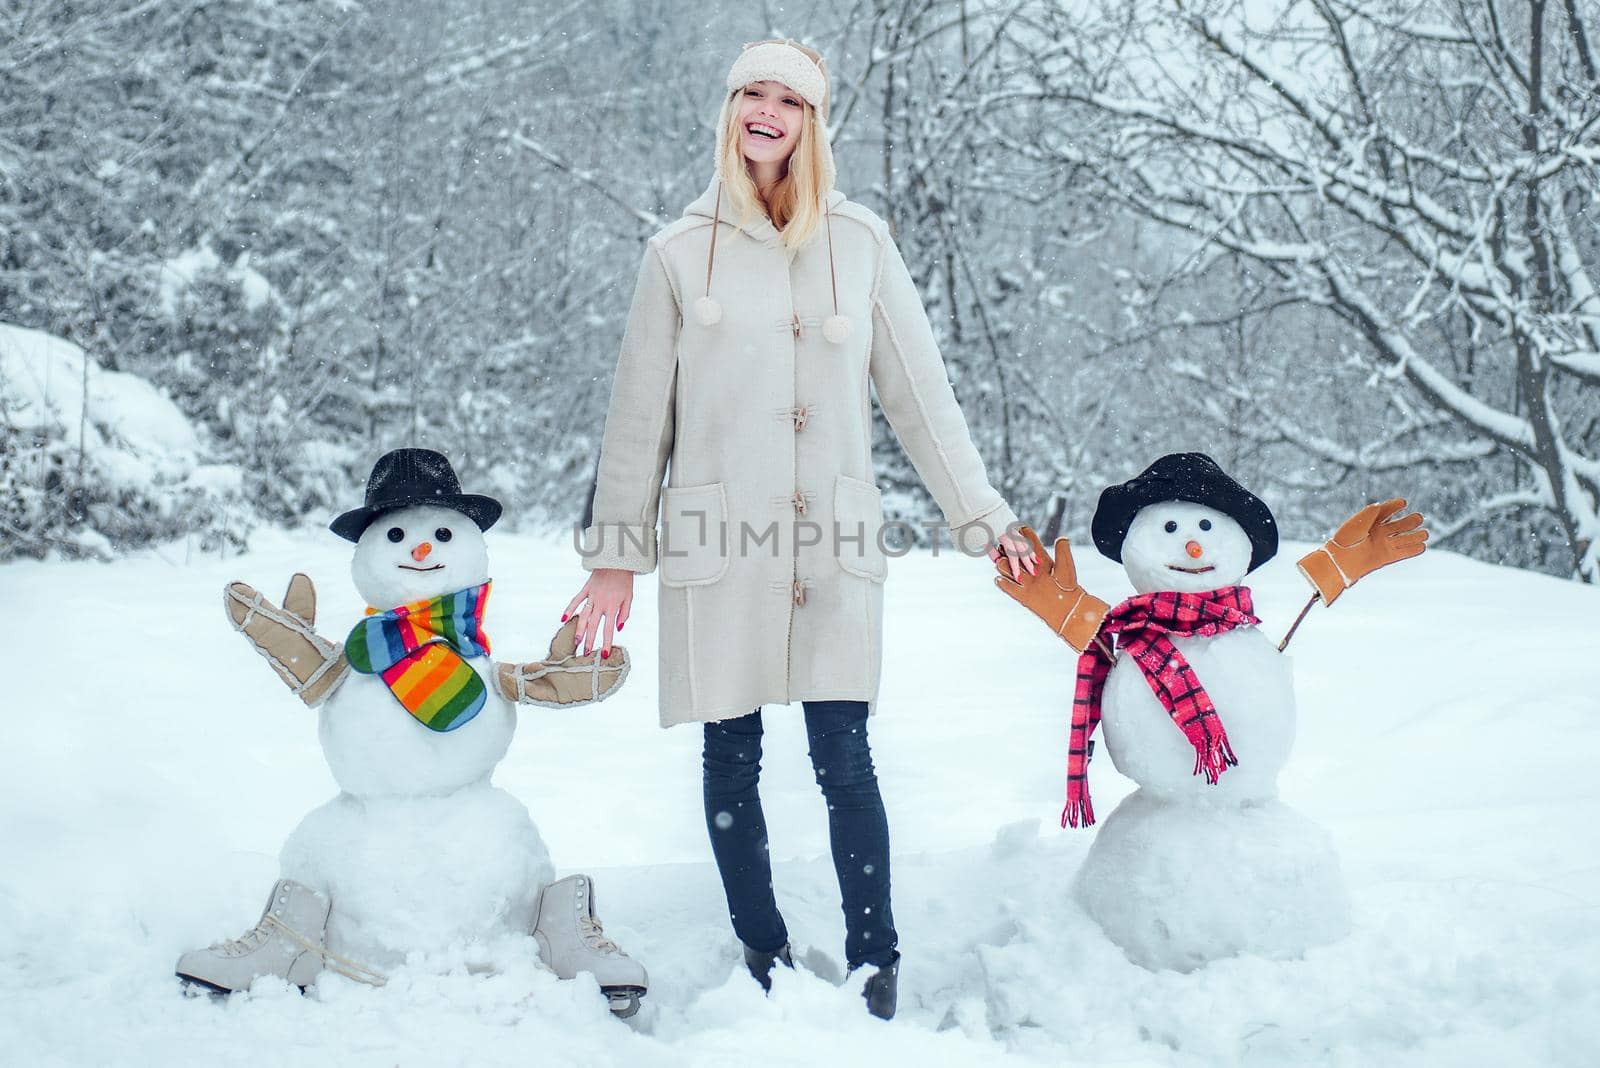 Winter woman. Funny Girl Love winter. Winter portrait of young woman in the winter snowy scenery. Cute girl making snowman on snowy field outdoor